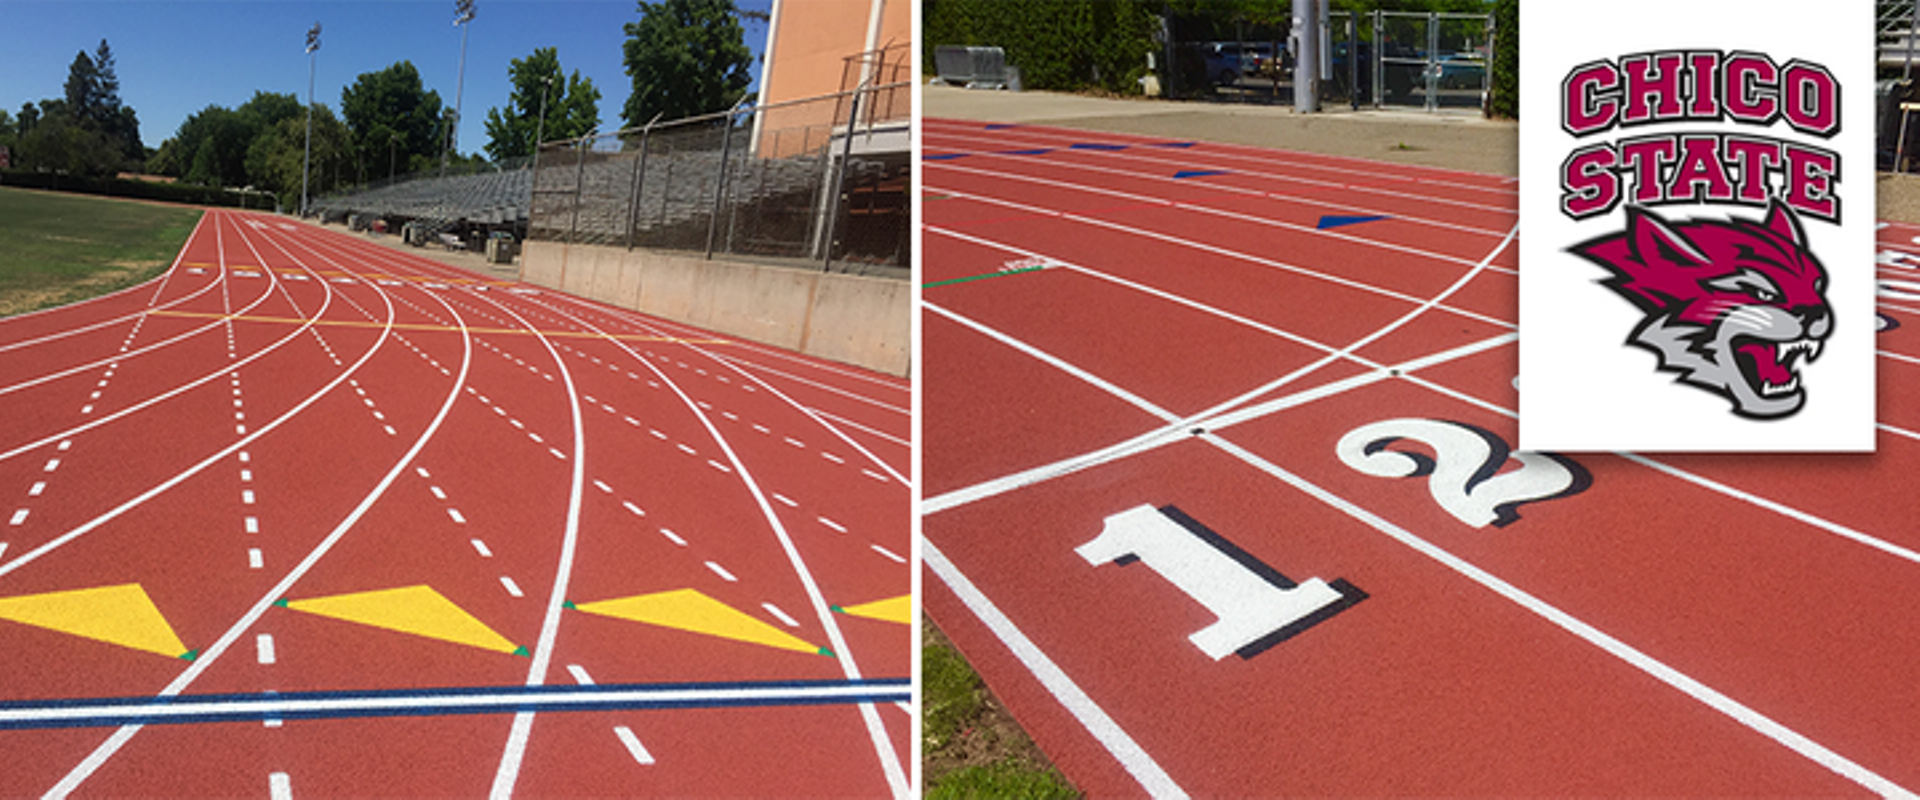 Chico State University Upgrades Track Surface to Beynon Sports - Beynon